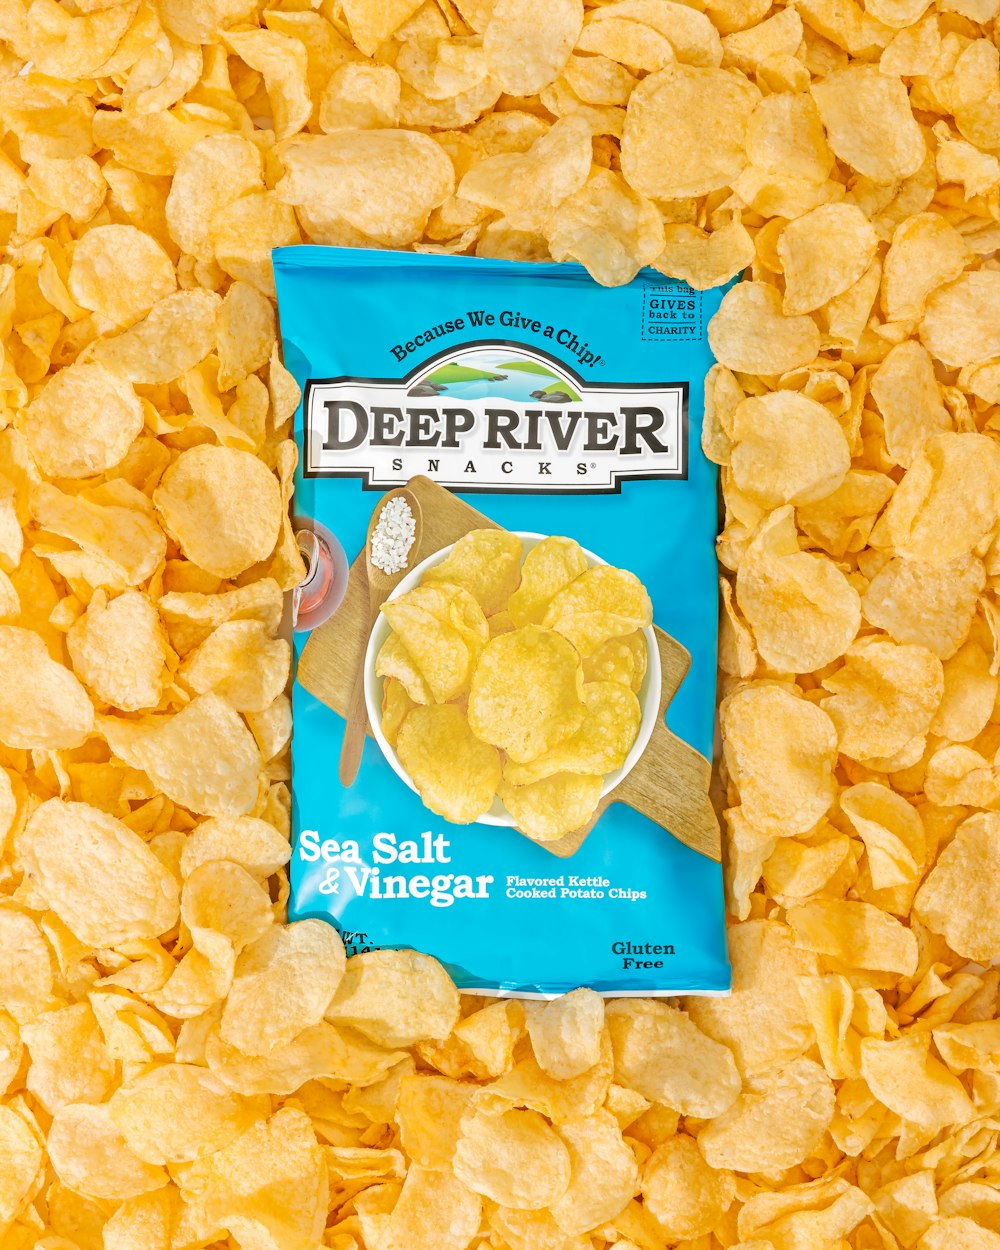 a bag of deep river sea salt and vinegar chips